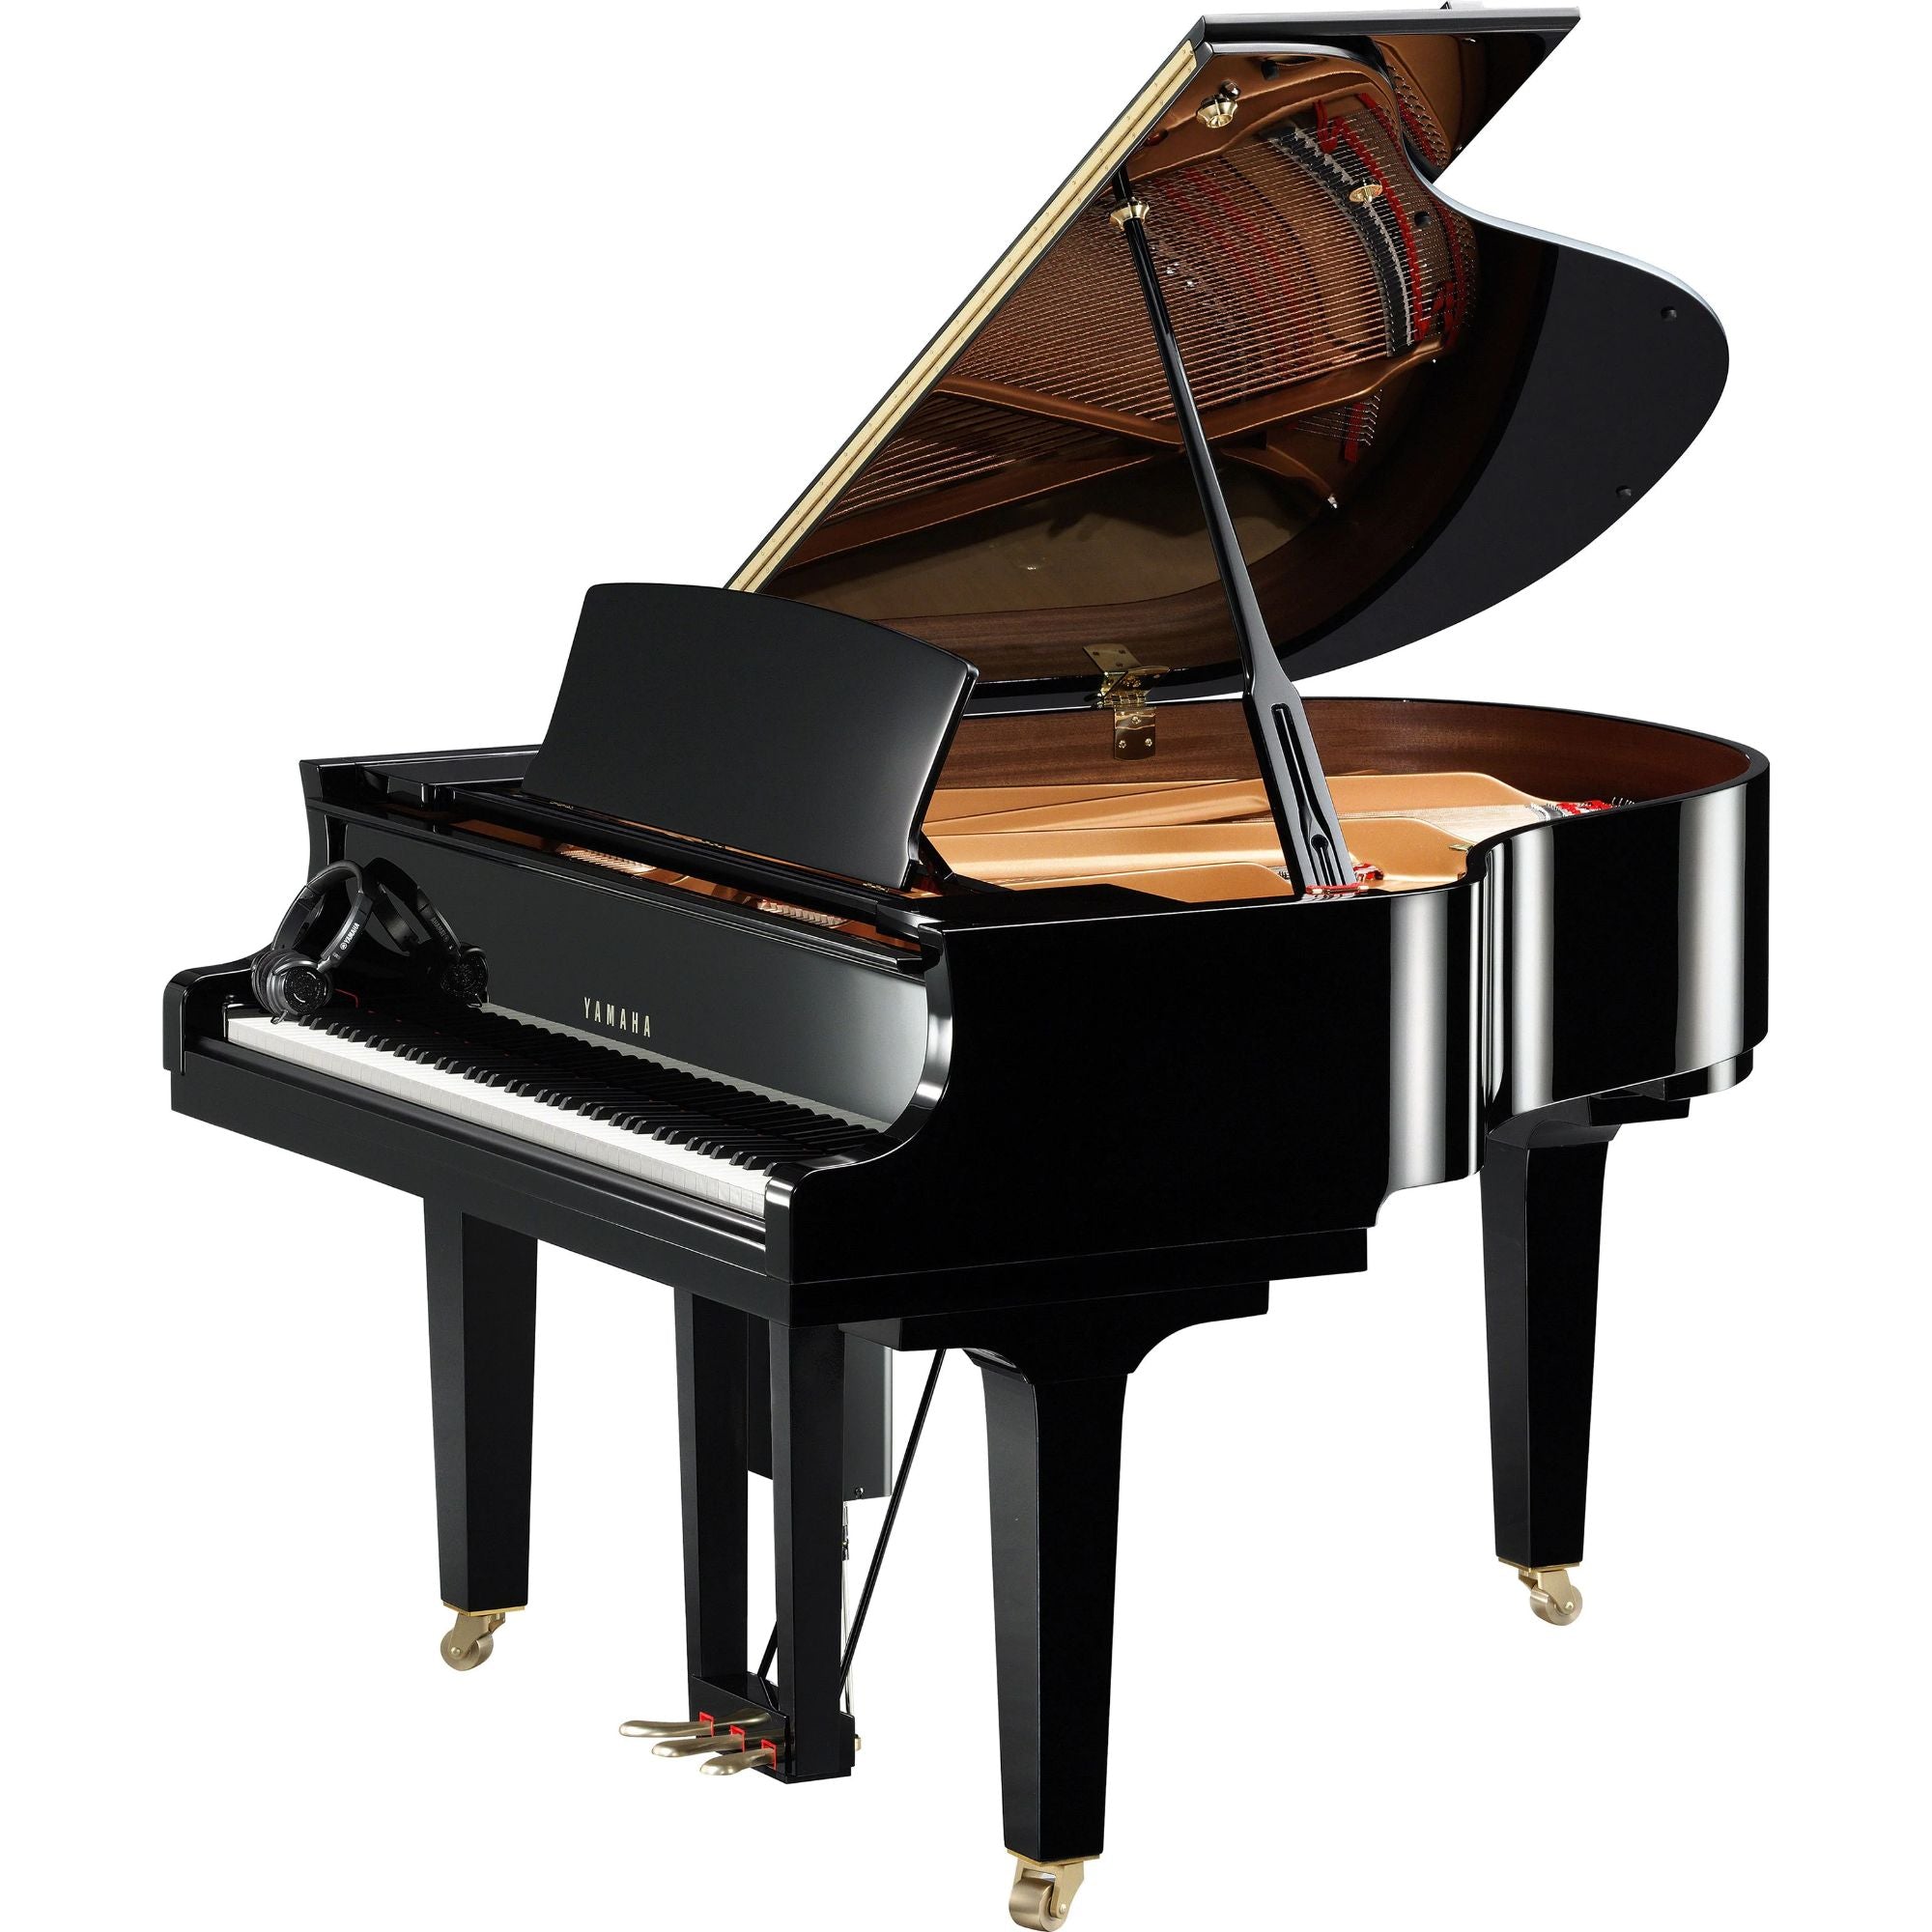 Yamaha DGC1 Enspire Grand Piano, Polished Ebony